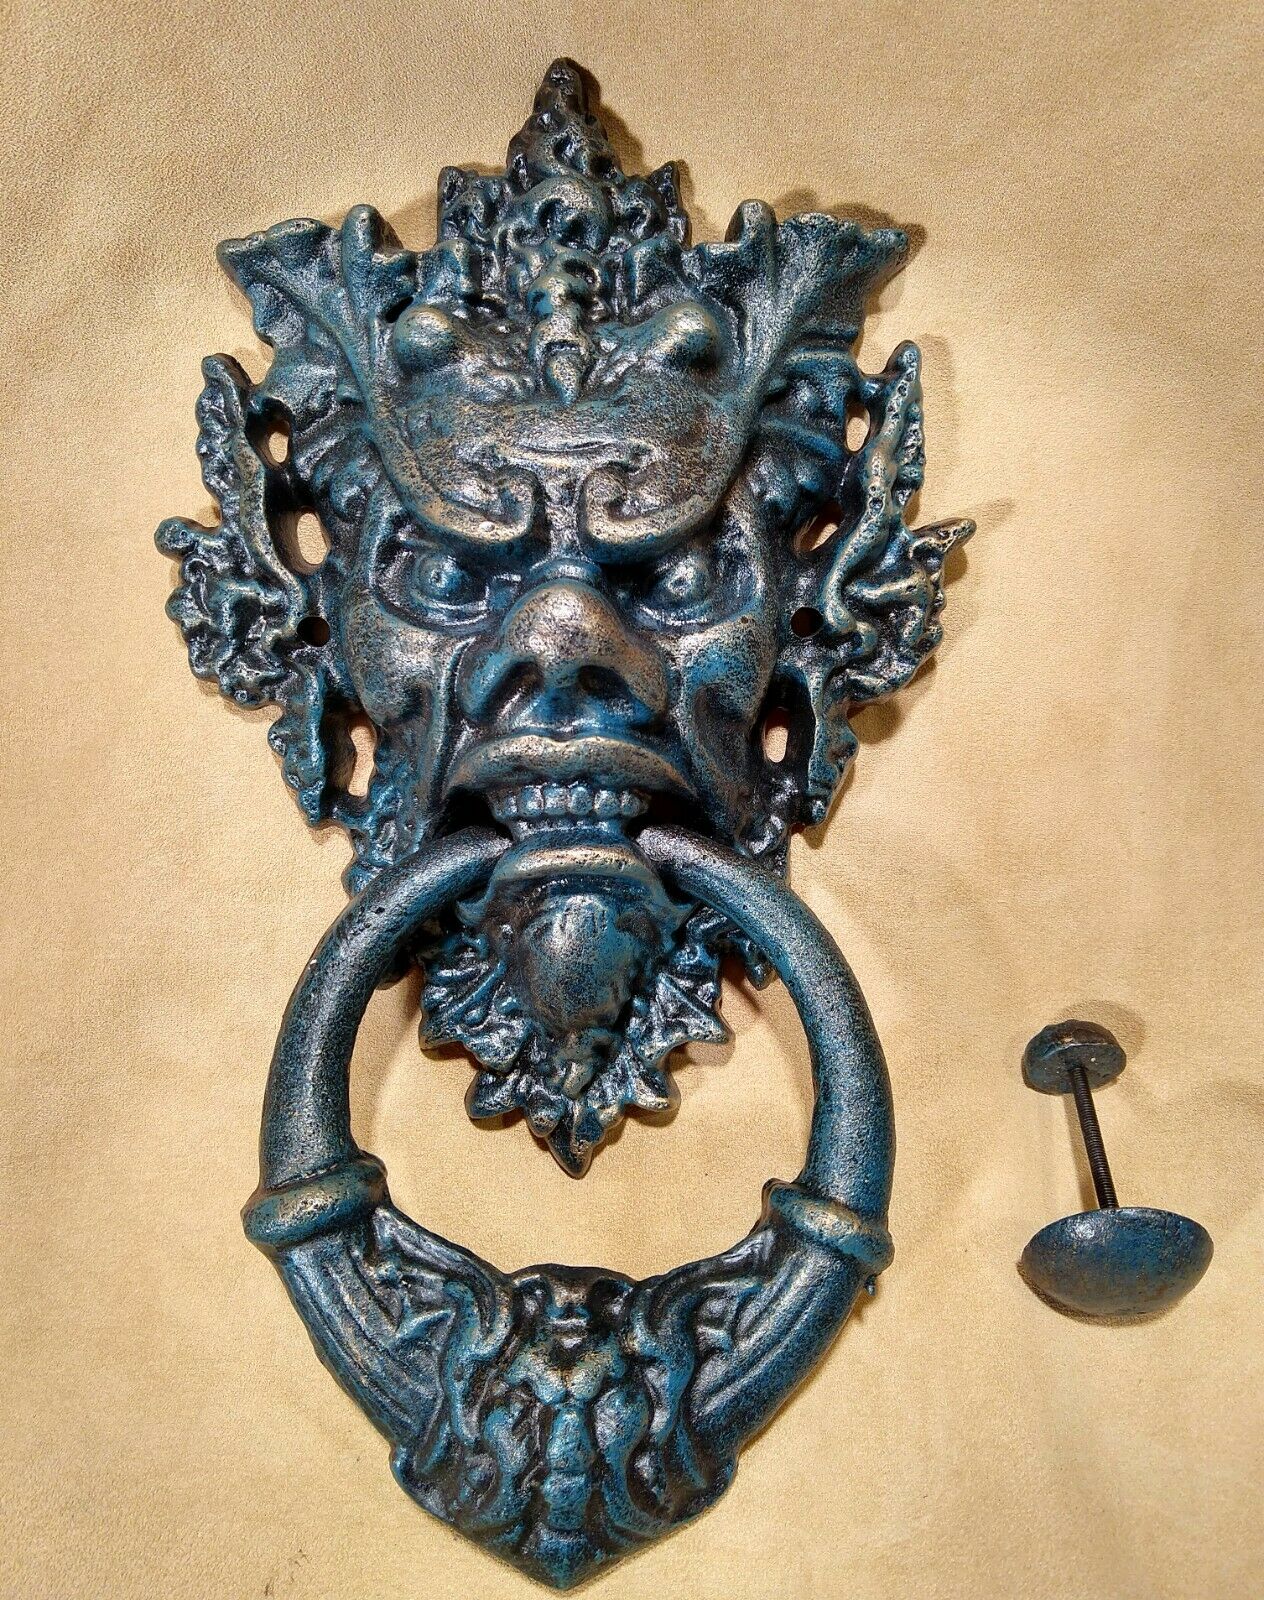 Gargoyle Door Knocker In Gilded Verdigris Patina ~ Cast Iron With Striker Button